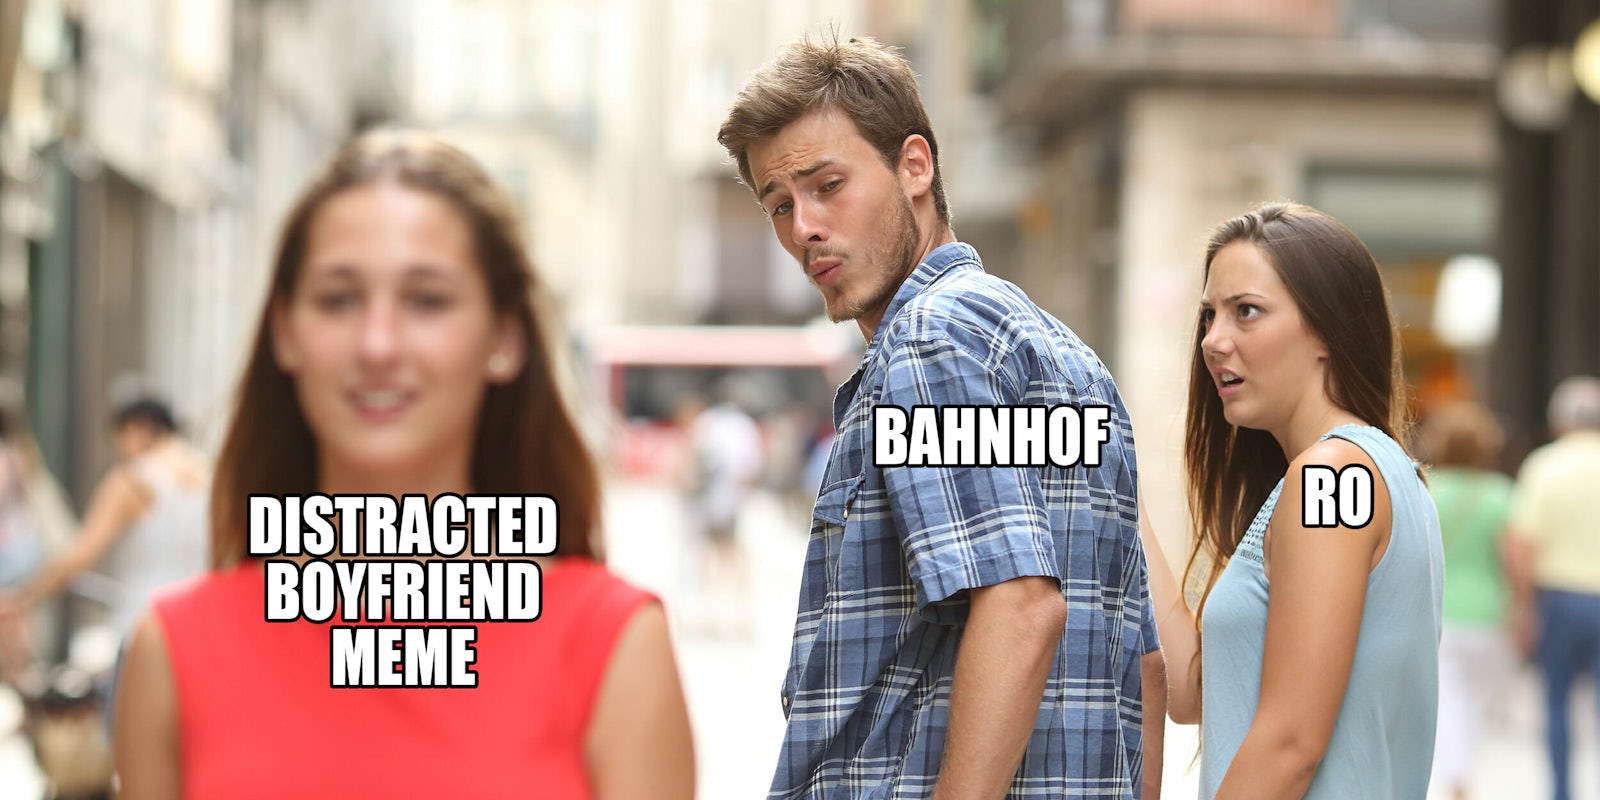 bahnhof ro distracted boyfriend meme